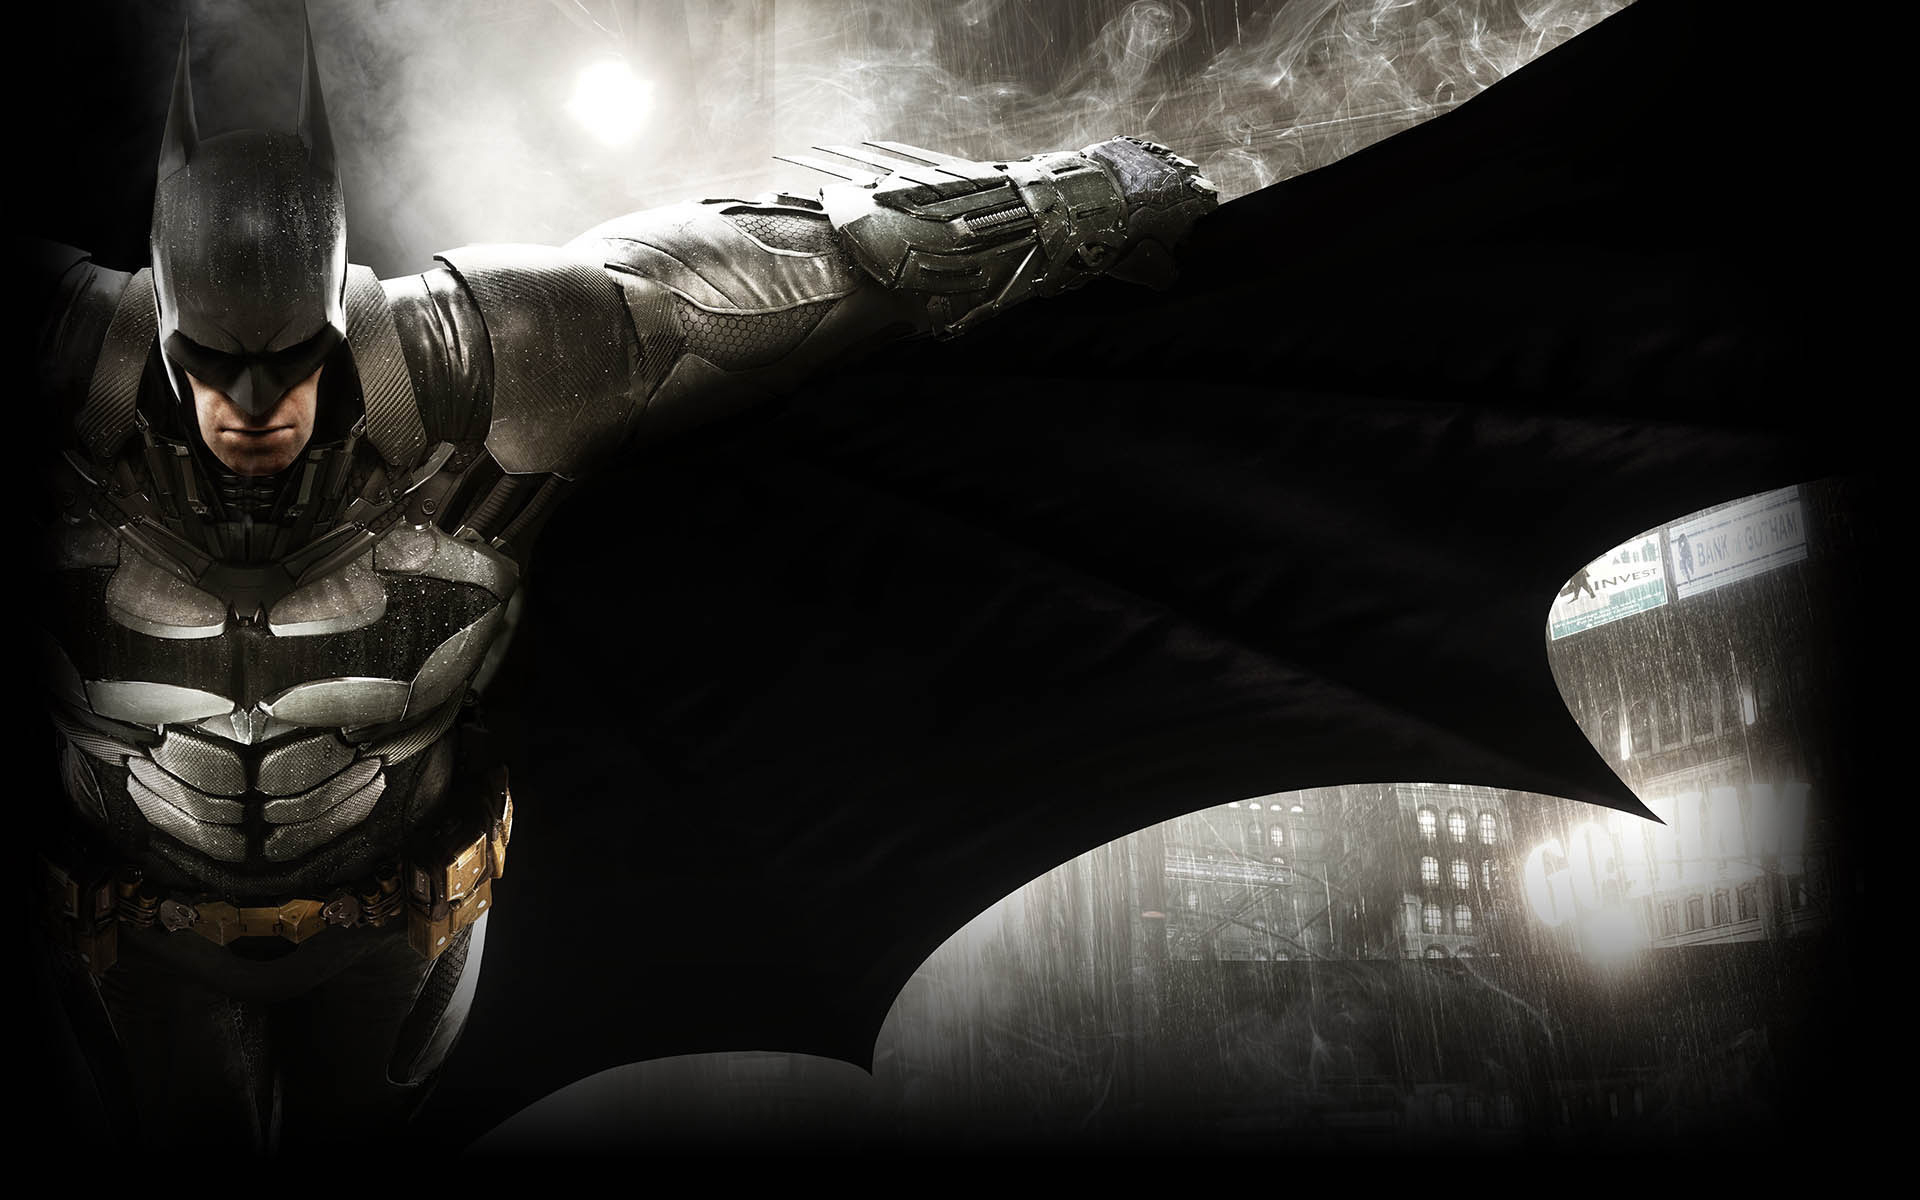 Batman™: Arkham Knight on Steam